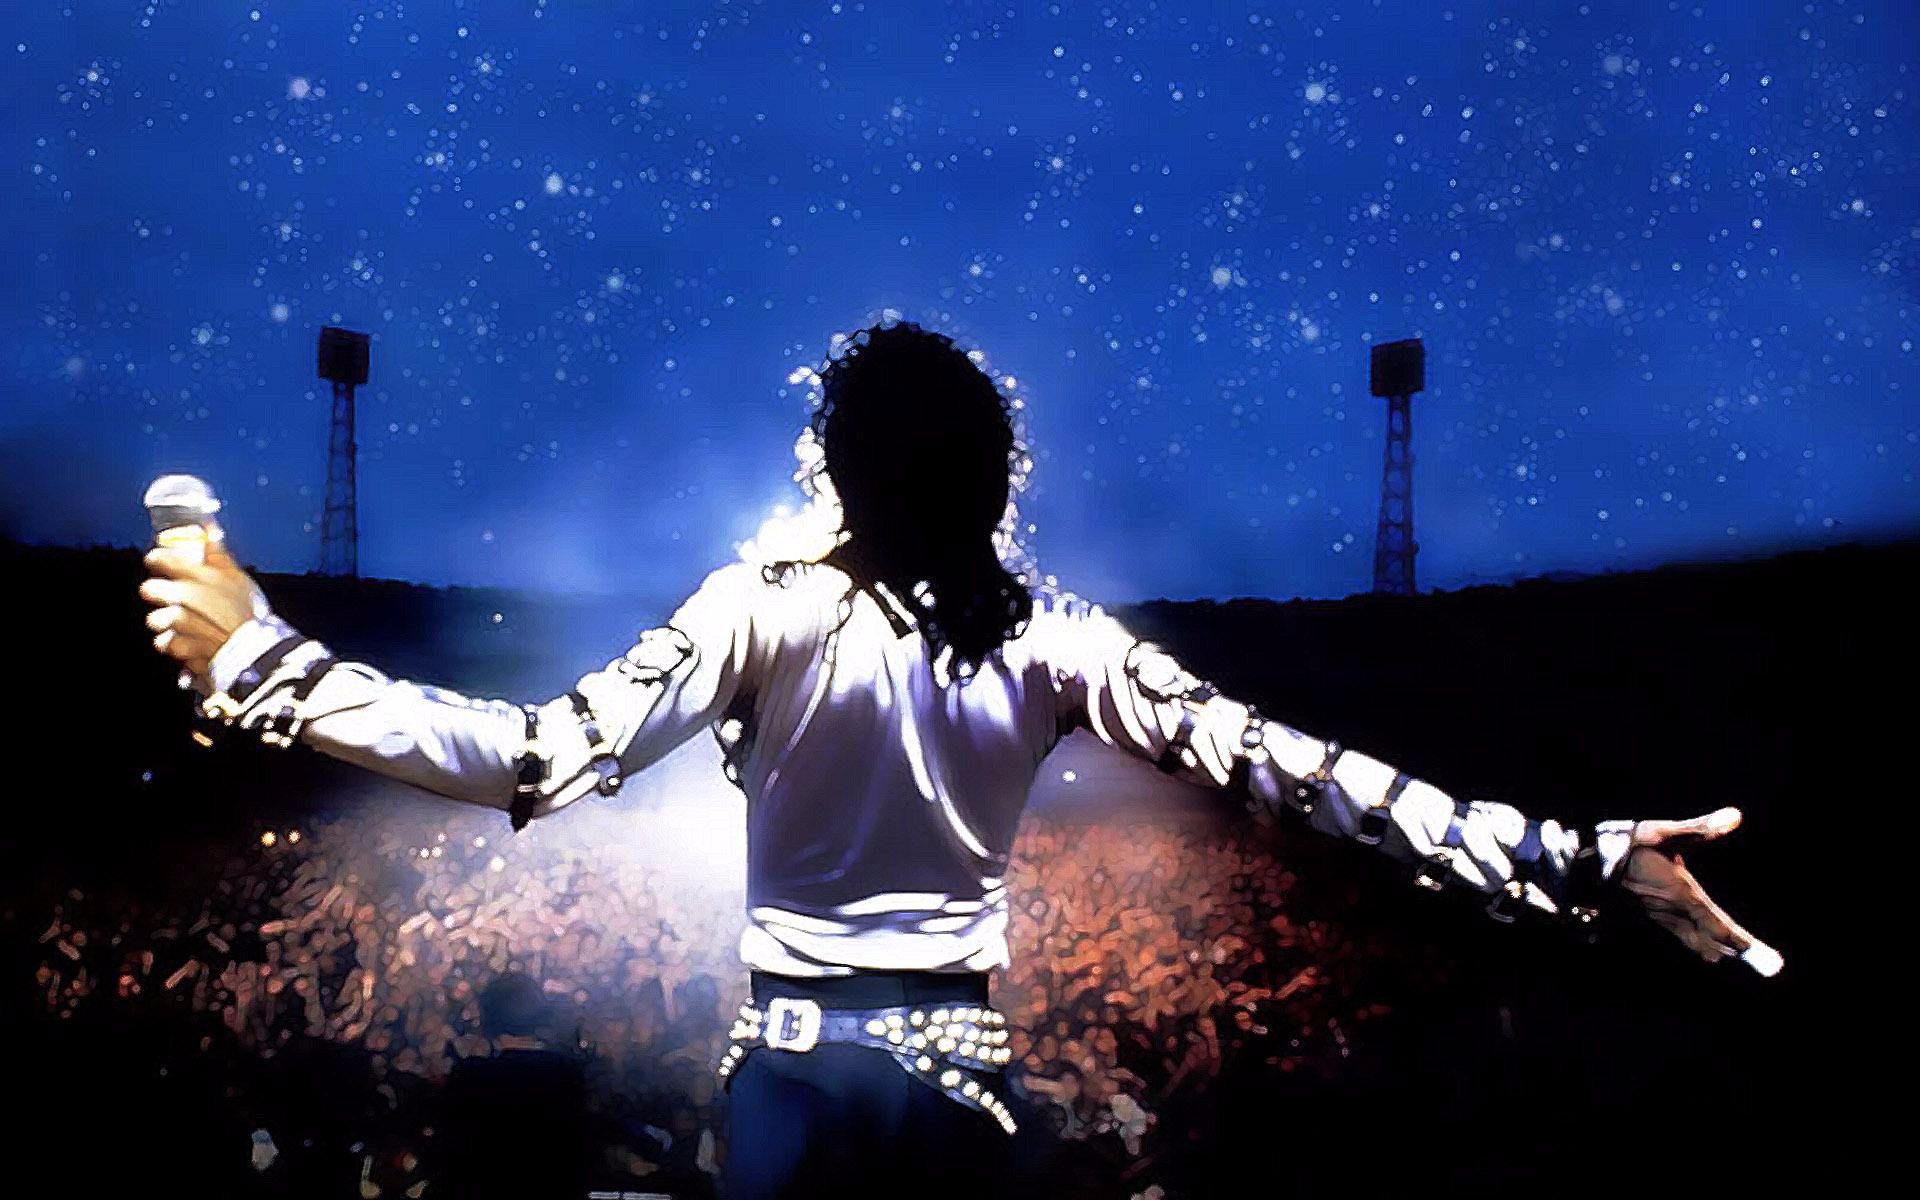 【MJ】迈克尔杰克逊经典现场,开头就被帅到了!《Billie jean》观众激动到哭,有的都可以直接上台当伴舞了！